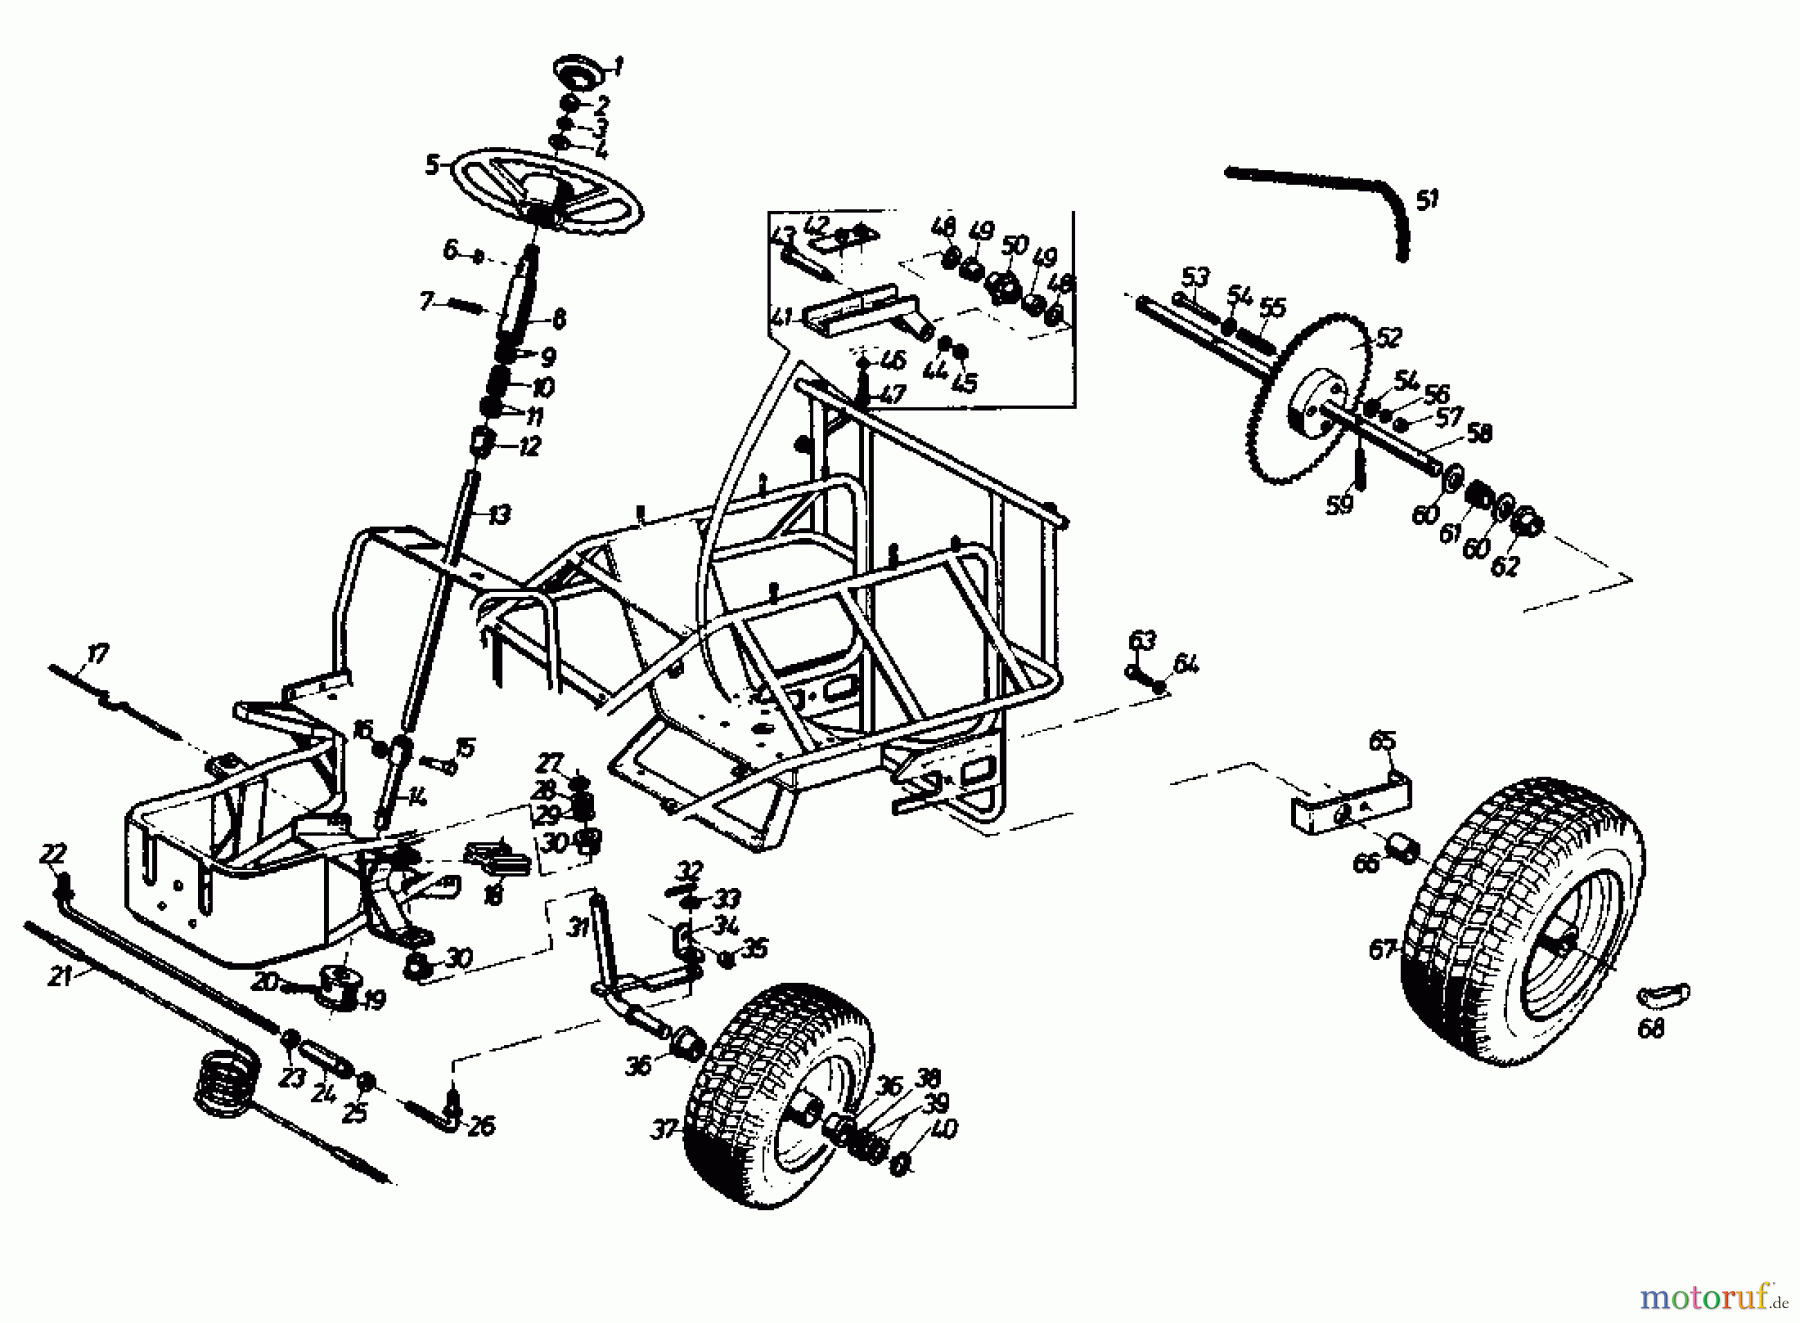  Gutbrod Lawn tractors Sprint 800 E 02840.05  (1988) Drive system, Steering wheel, Steering, Wheels